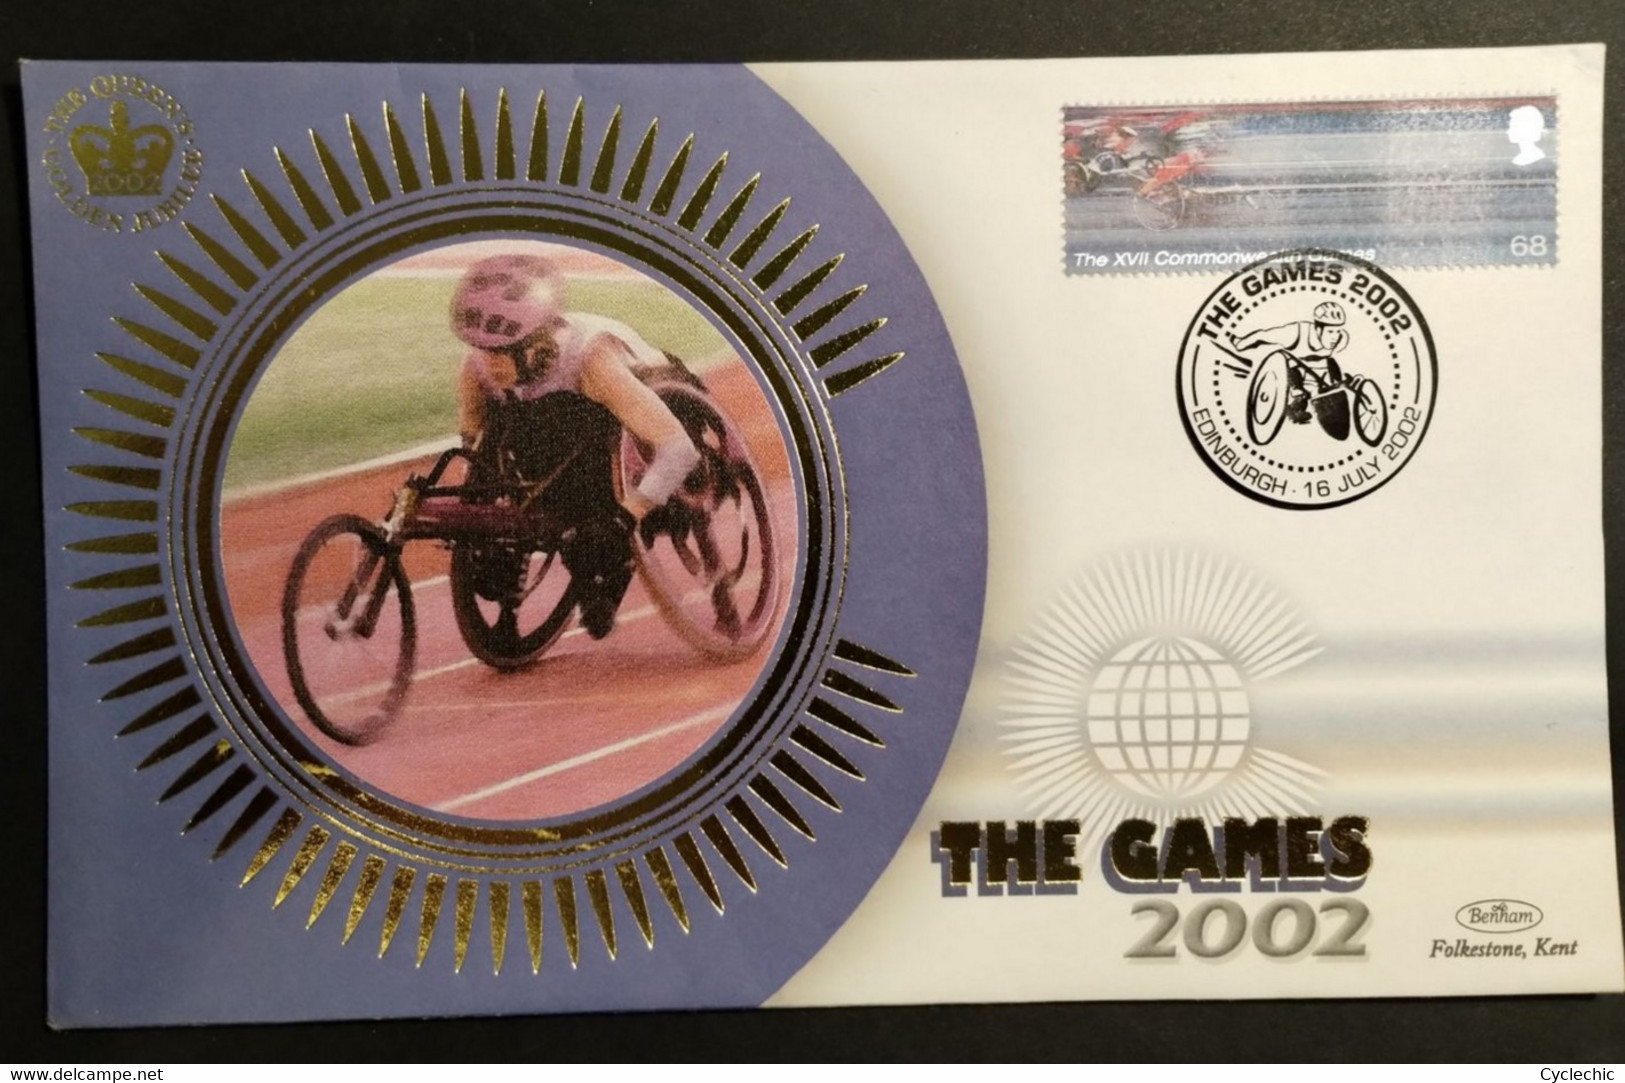 Commonwealth Games Manchester - 2002 Great Britain UK Paralympics Wheelchair - 2001-2010 Dezimalausgaben